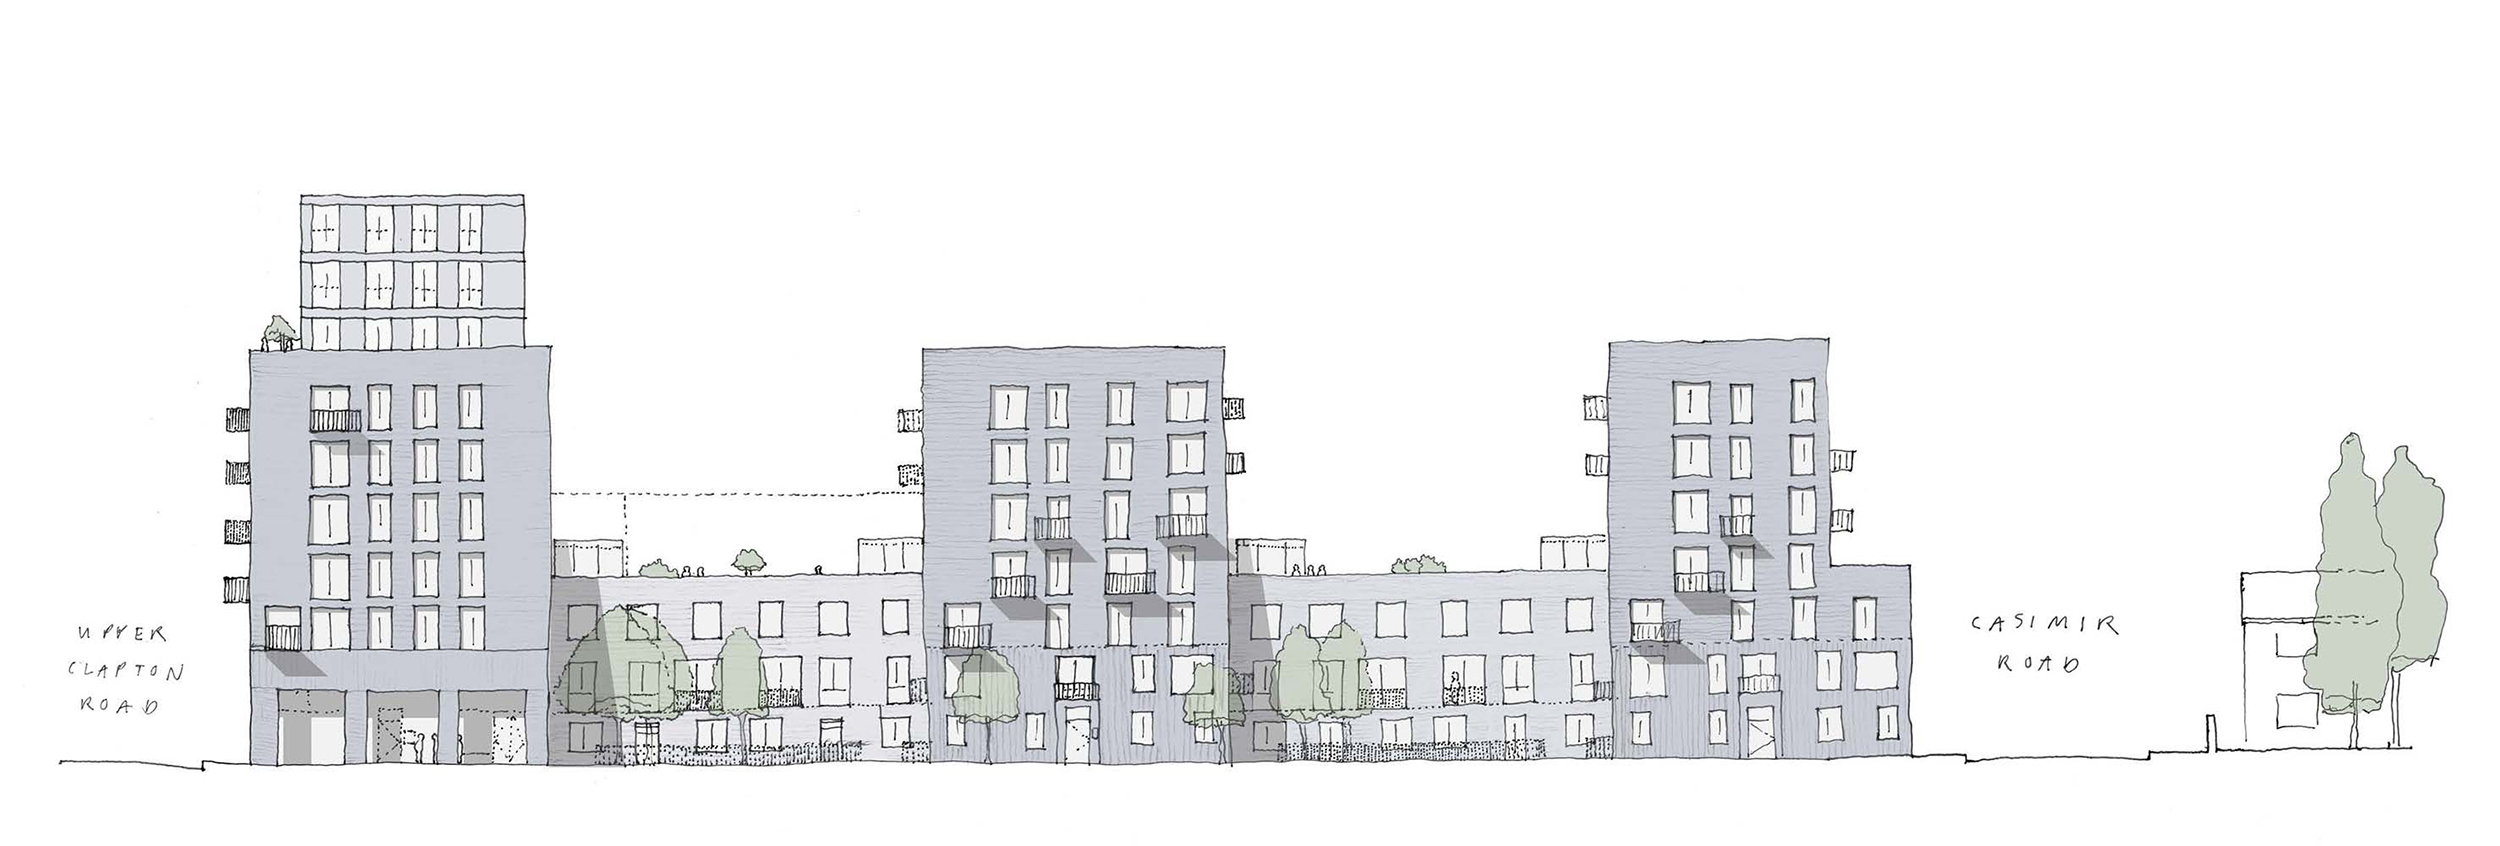 New apartment buildings in Hackney